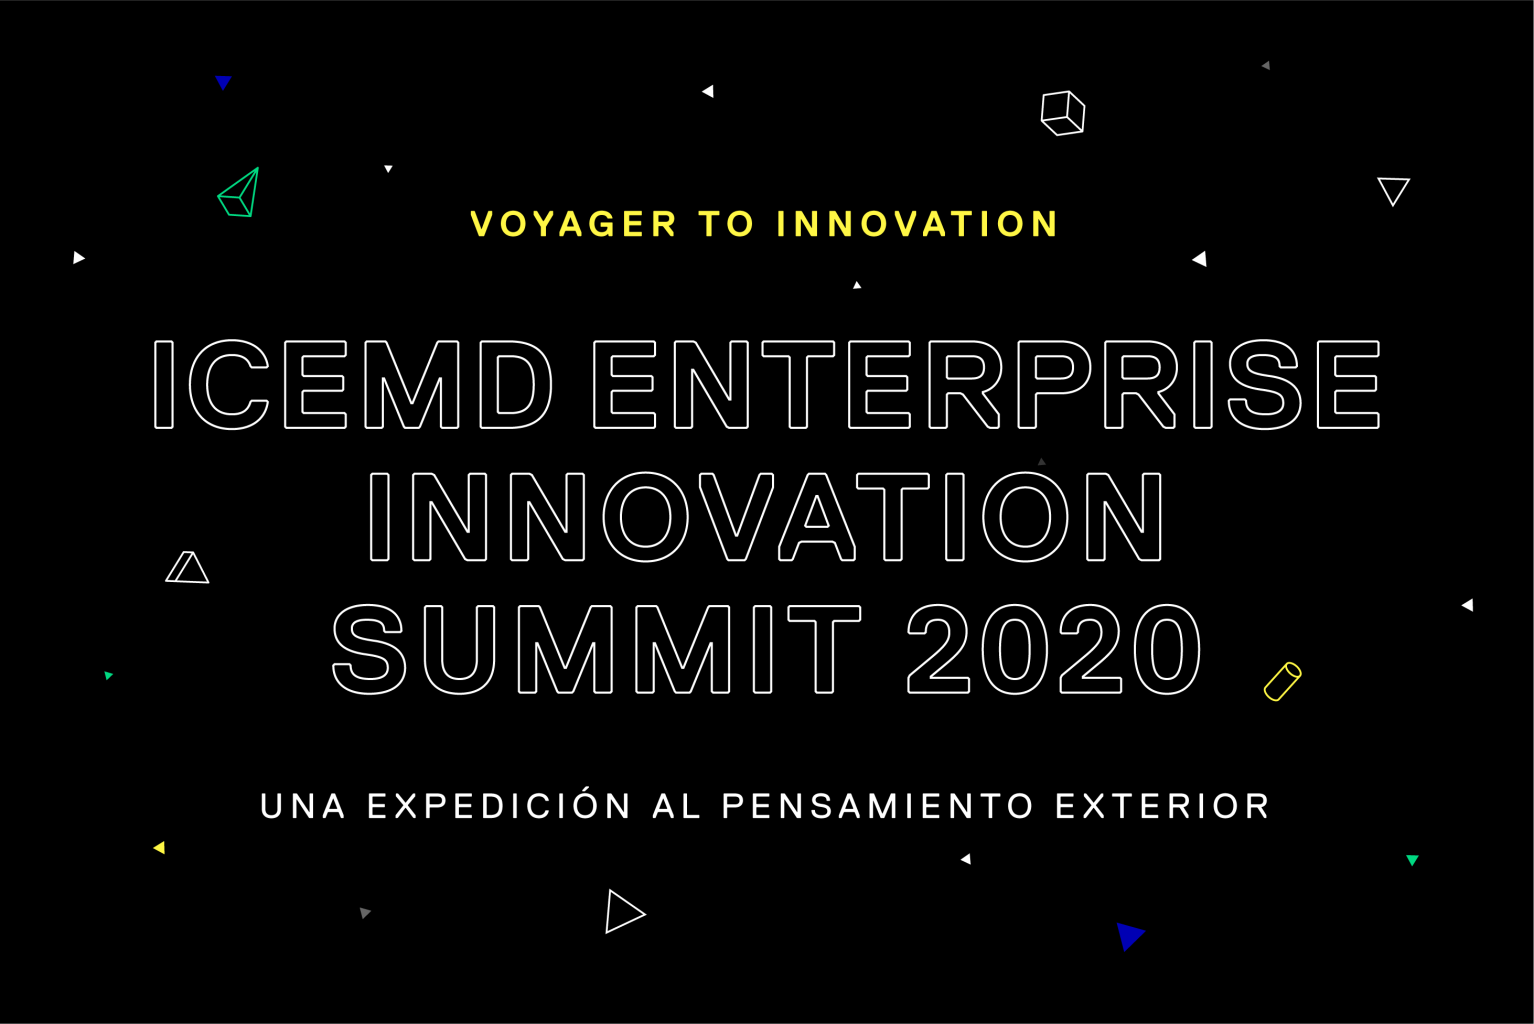 Enterprise Innovation Summit